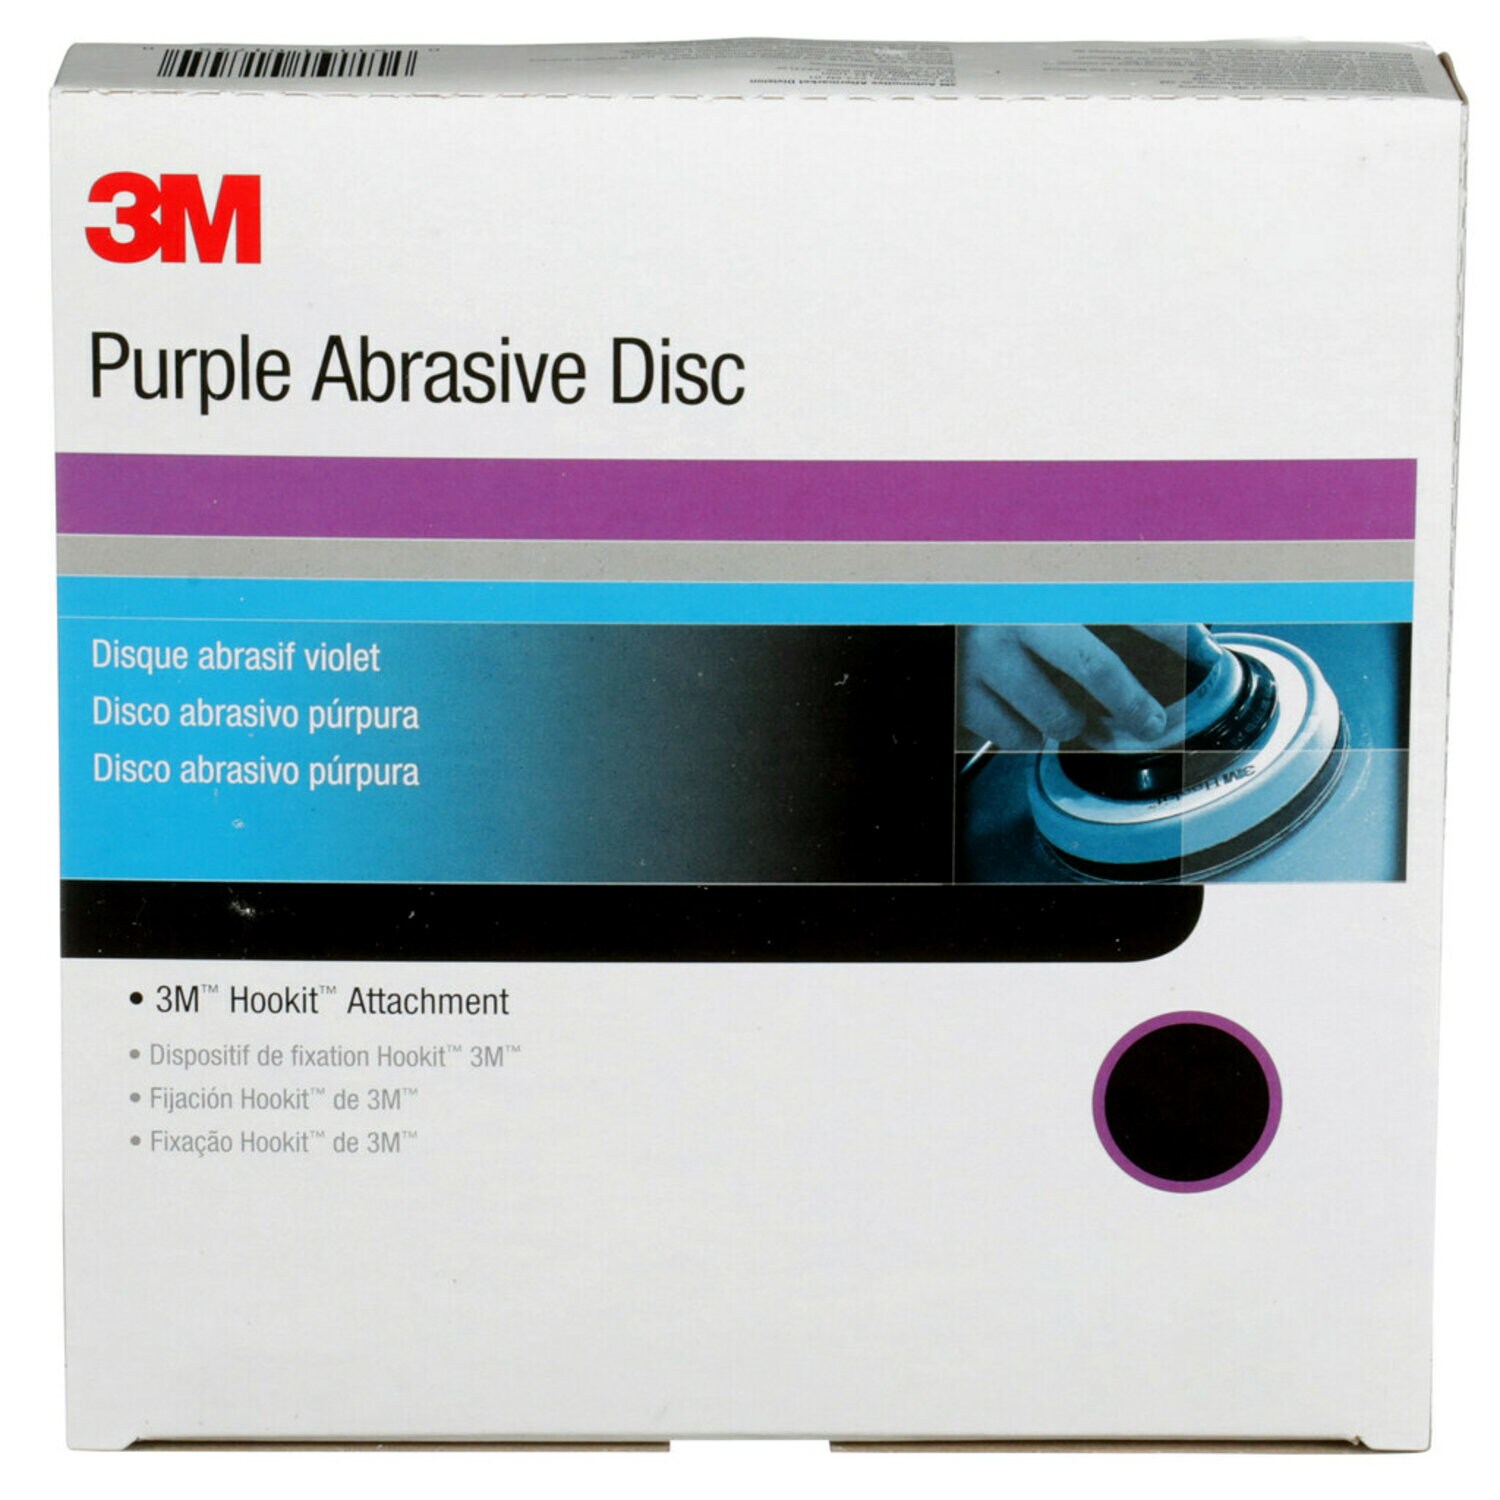 7010308757 - 3M Purple Abrasive Disc, 30687, 6 in, 36E, 25 discs per carton, 4
cartons per case